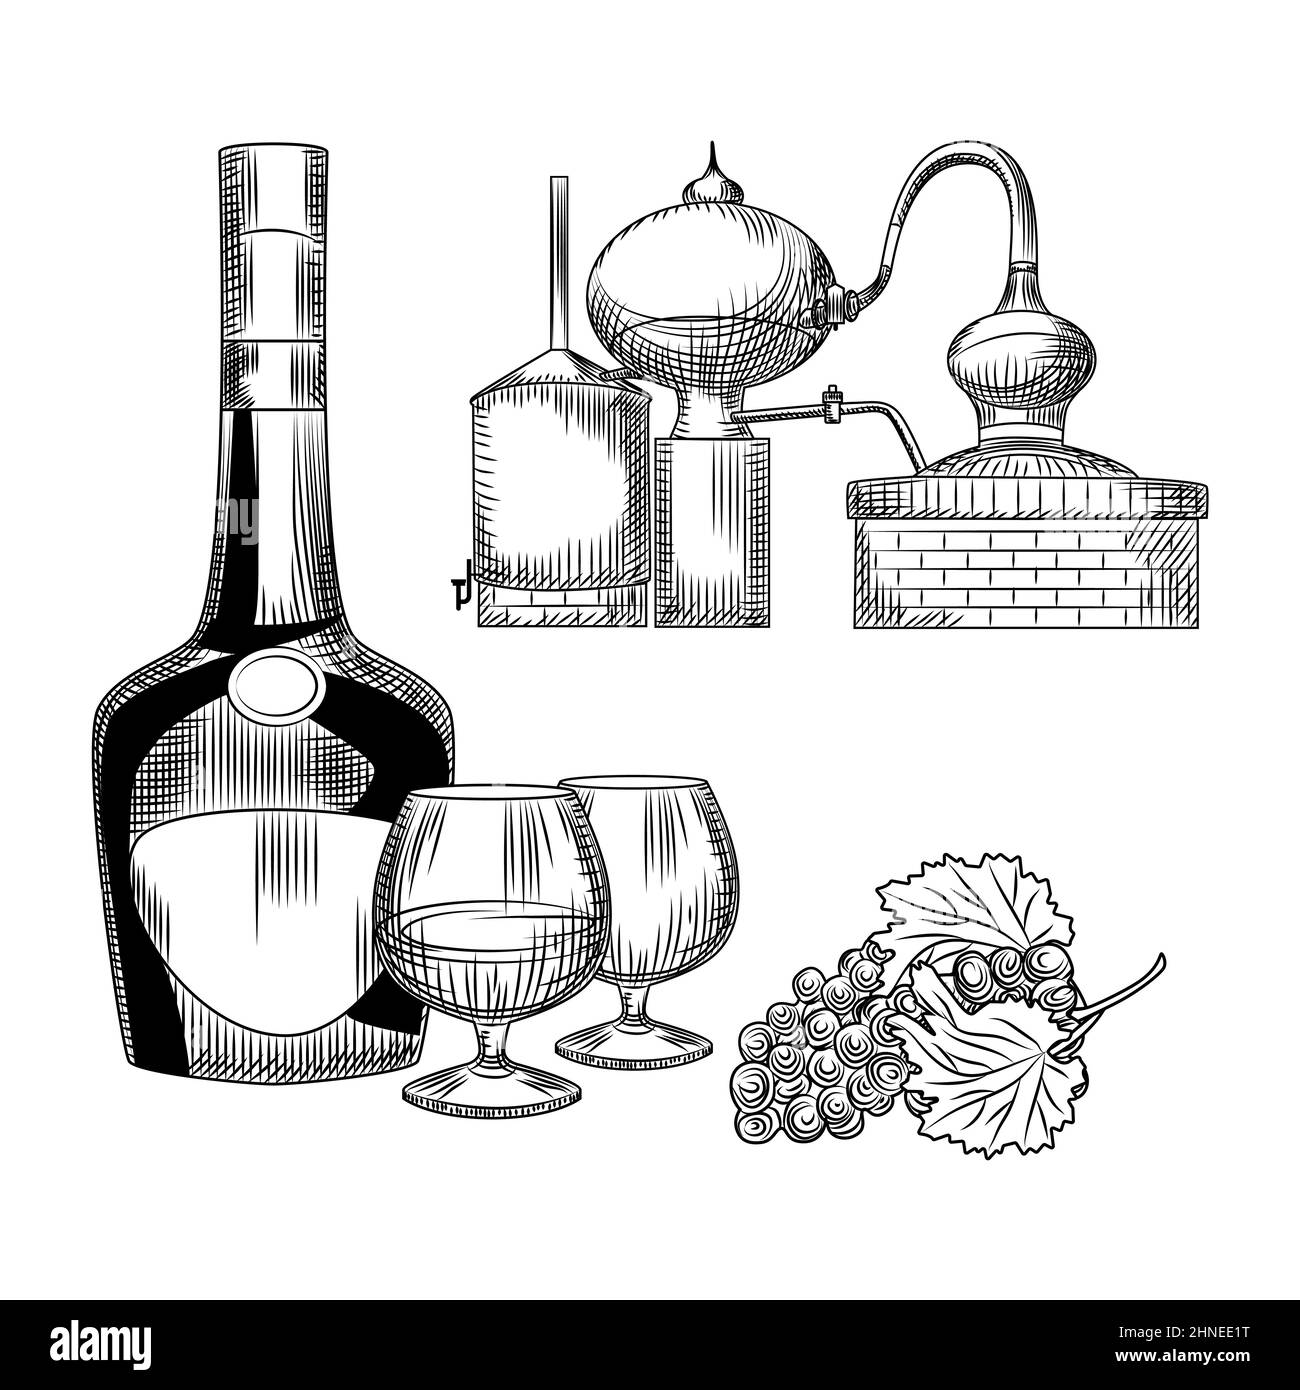 Calvados brandy Black and White Stock Photos & Images - Alamy